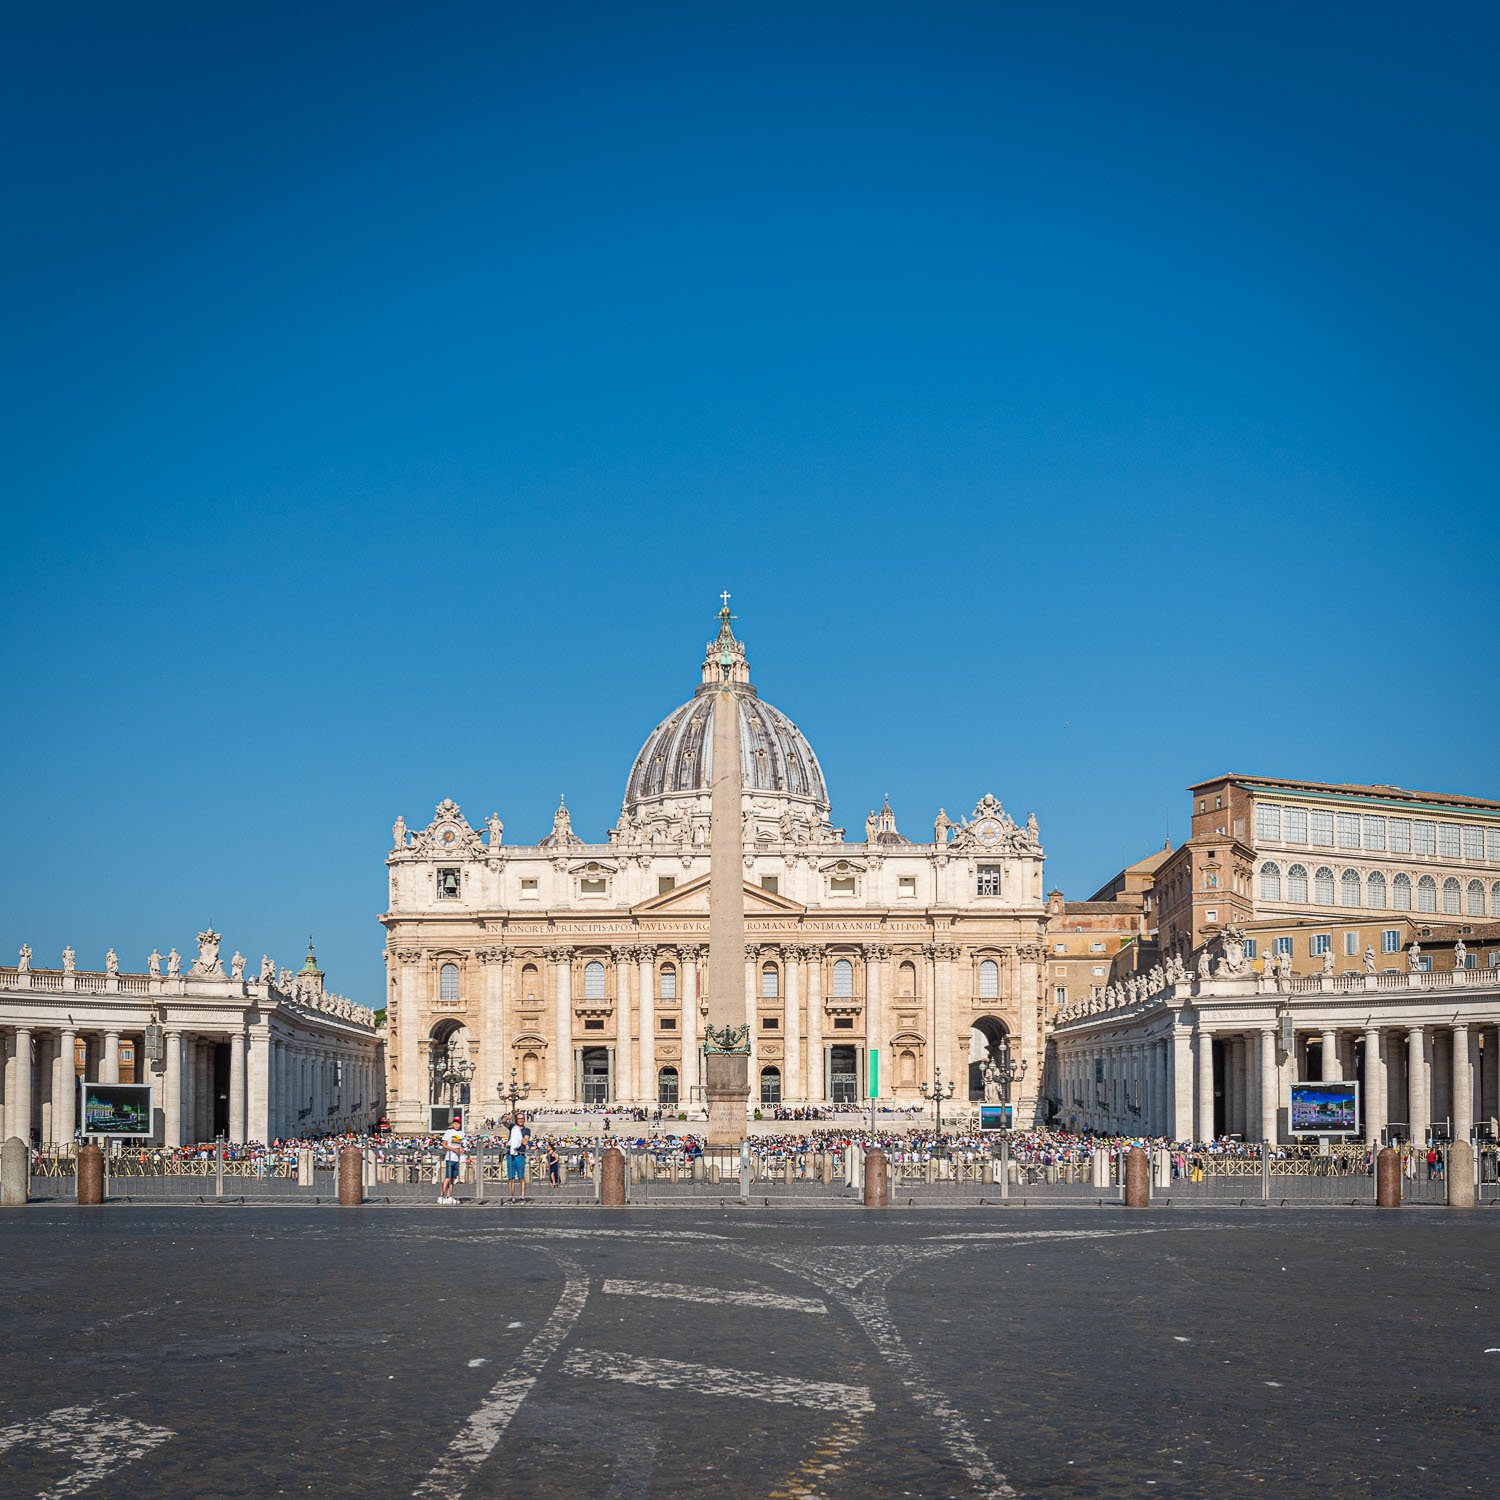 religious sites in Rome - St. Peter's Basilica